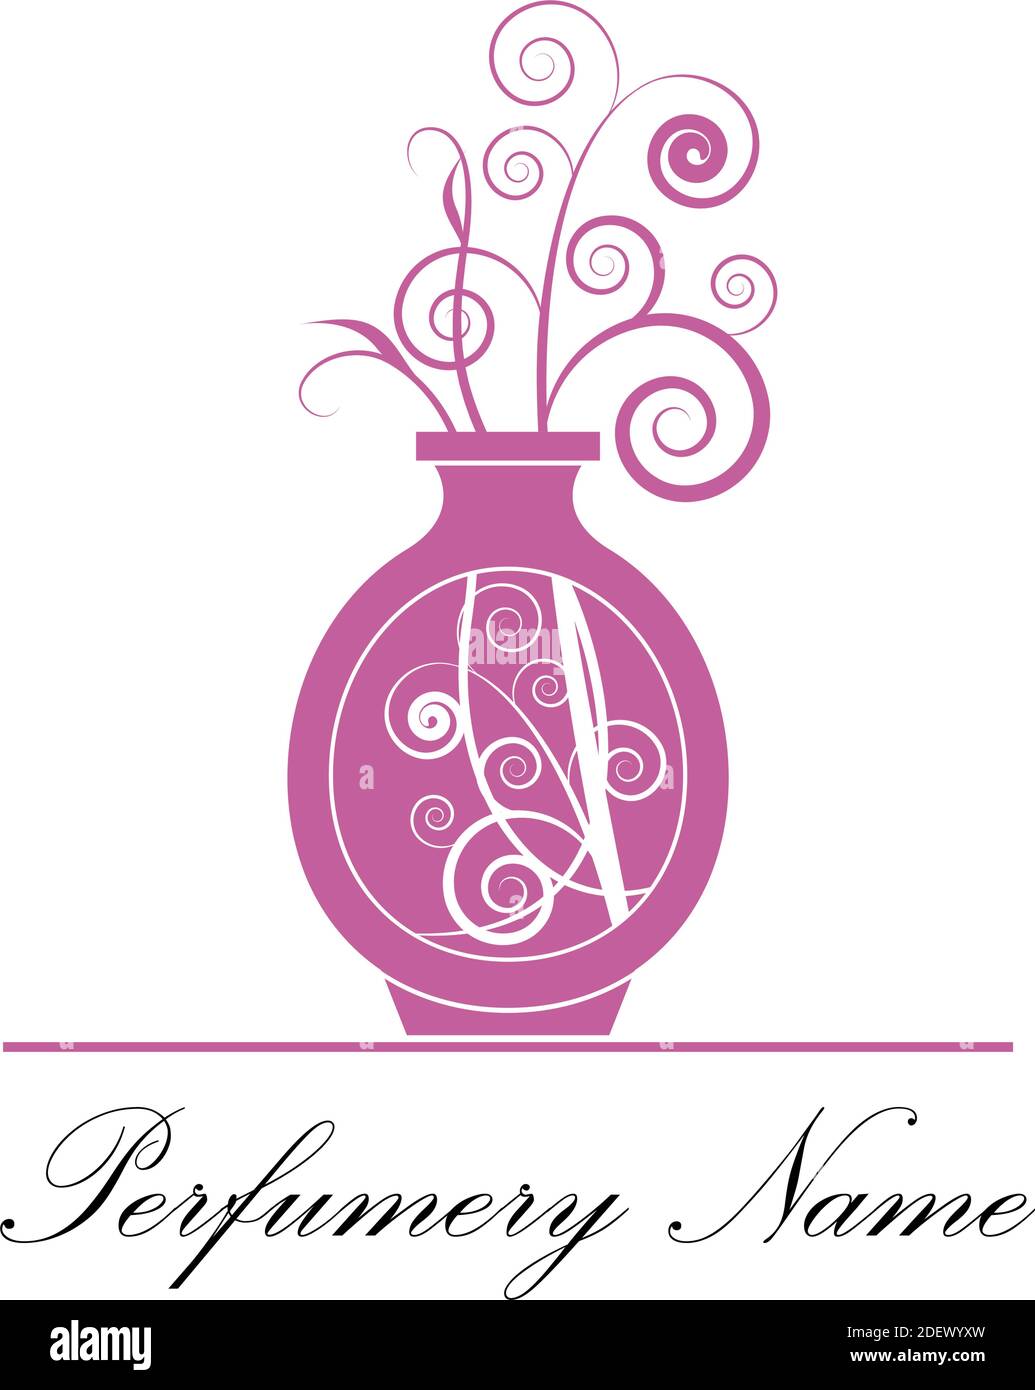 perfume logos and names